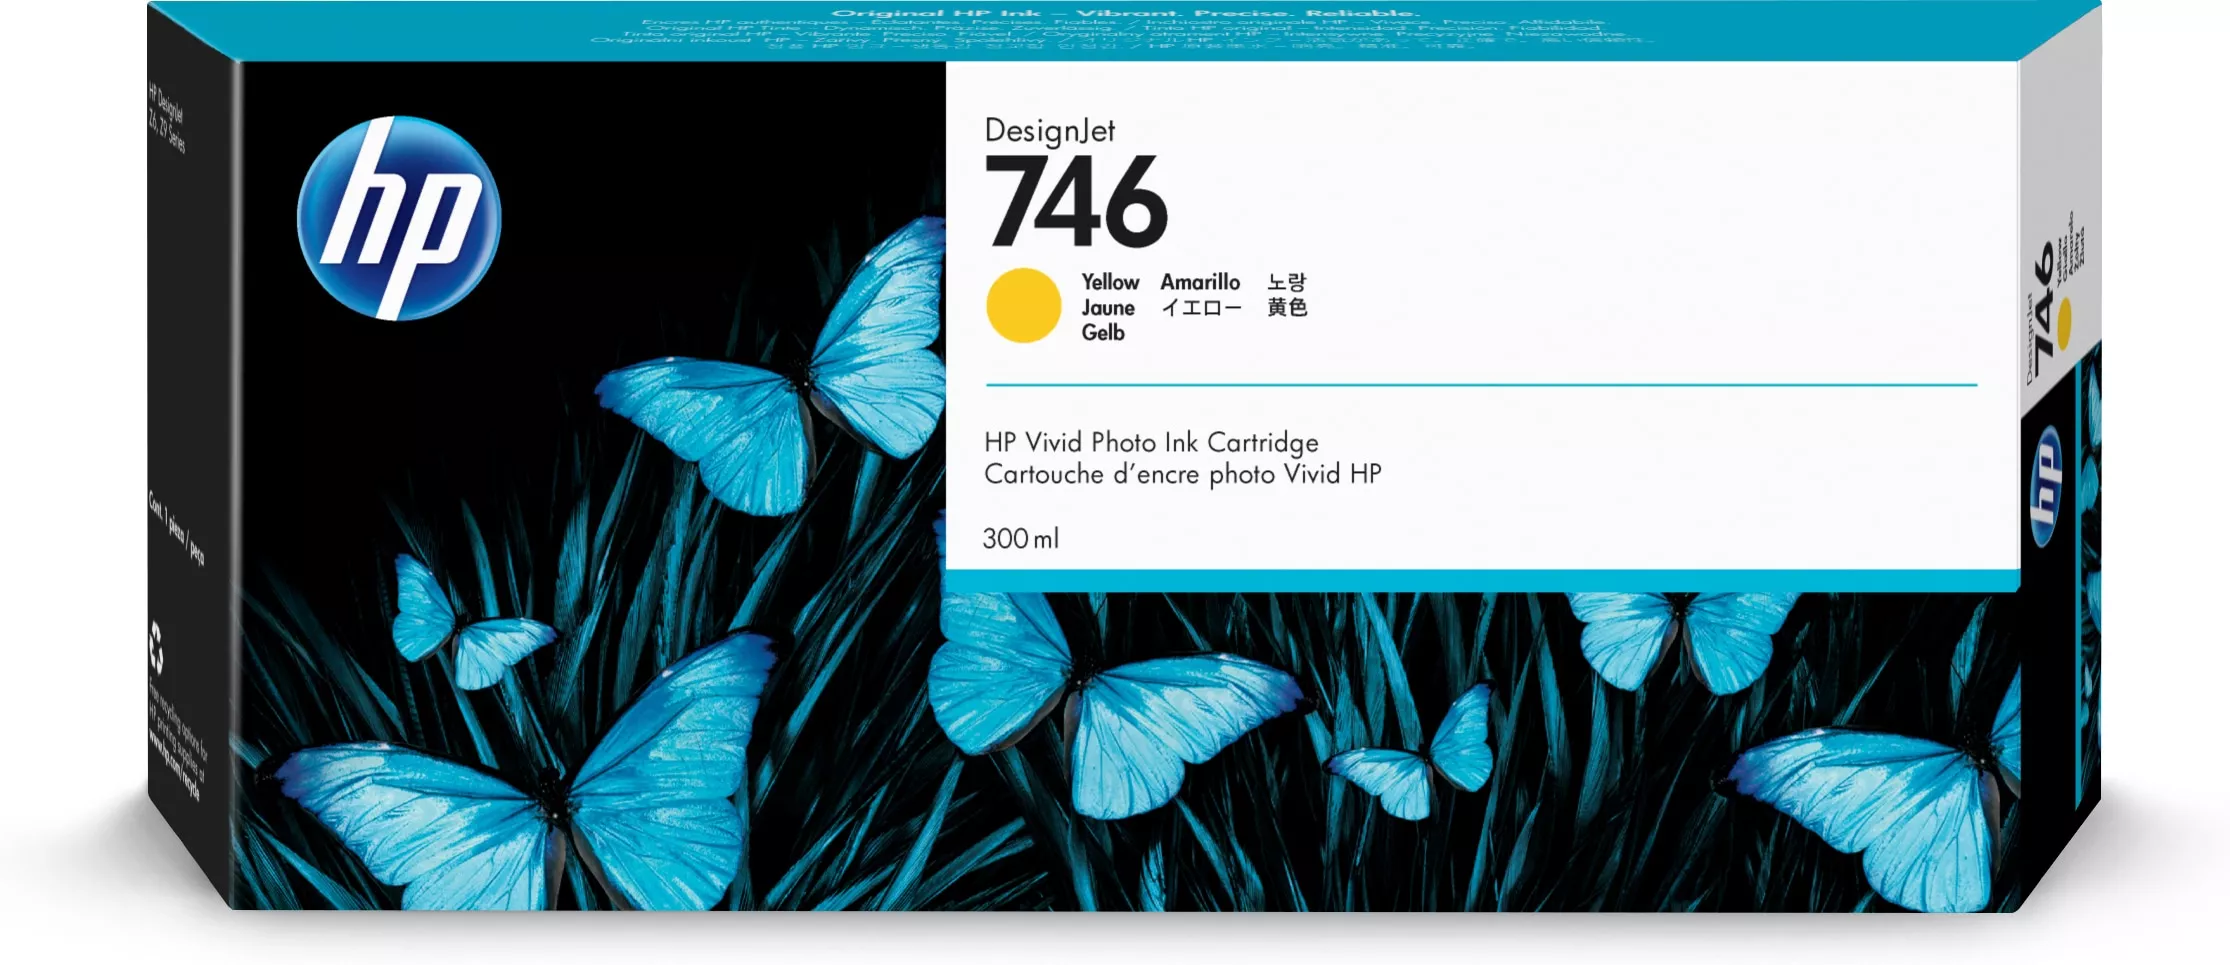 Vente HP 746 300-ml Yellow Ink Cartridge HP au meilleur prix - visuel 2